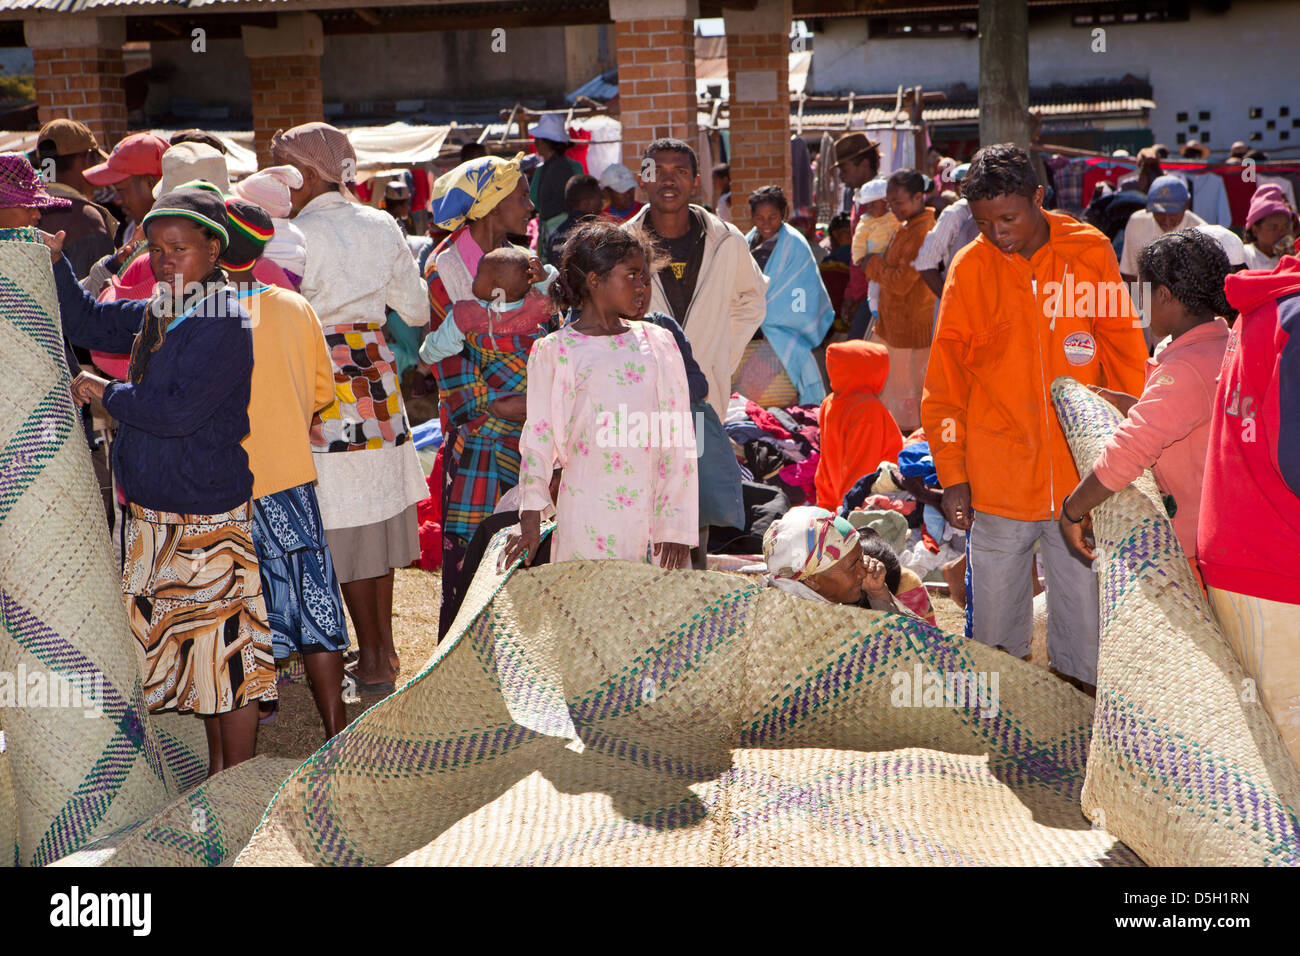 Madagascar, Ambositra, Marche Sandrandahy market, customers at woven matting stall Stock Photo